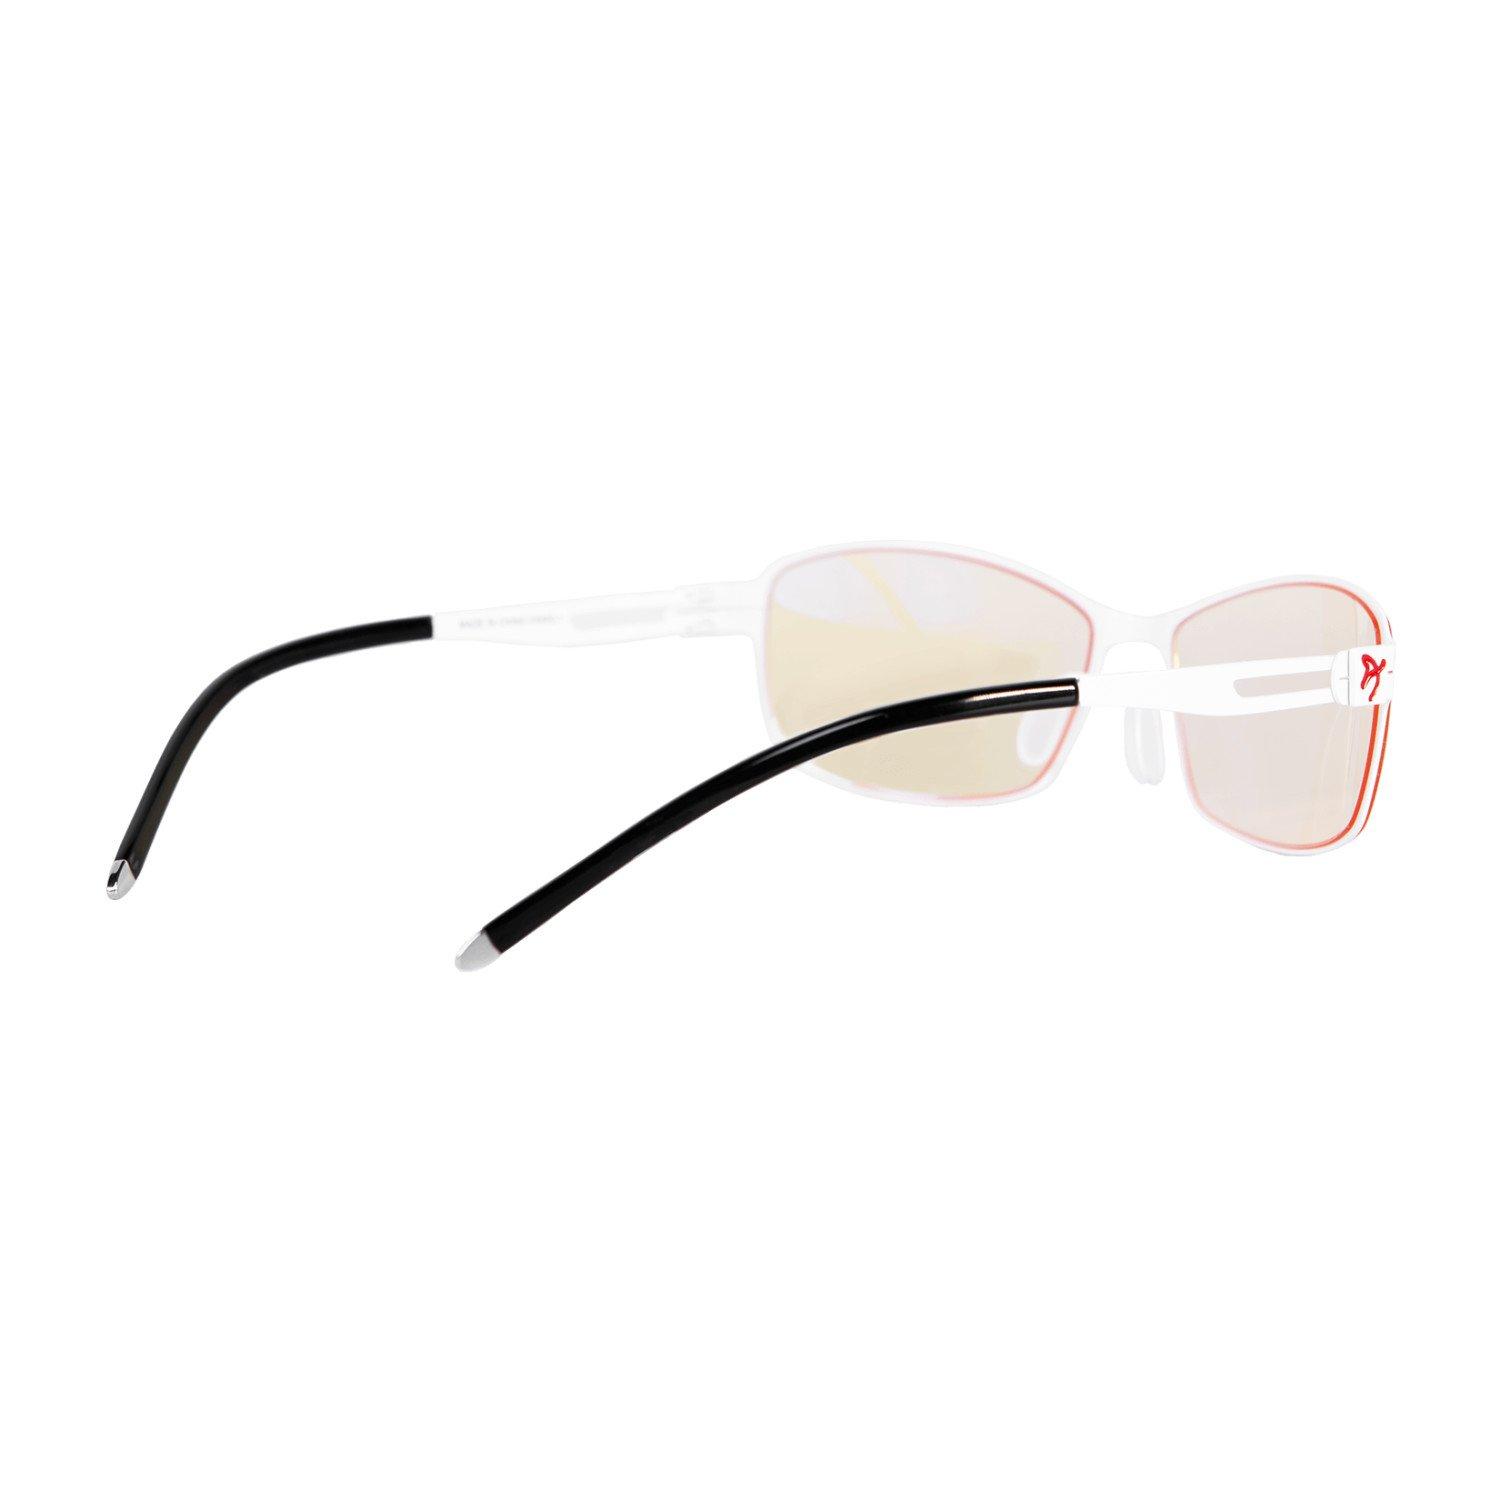 list item 3 of 4 Arozzi Visione VX4001 White Computer Gaming Glasses